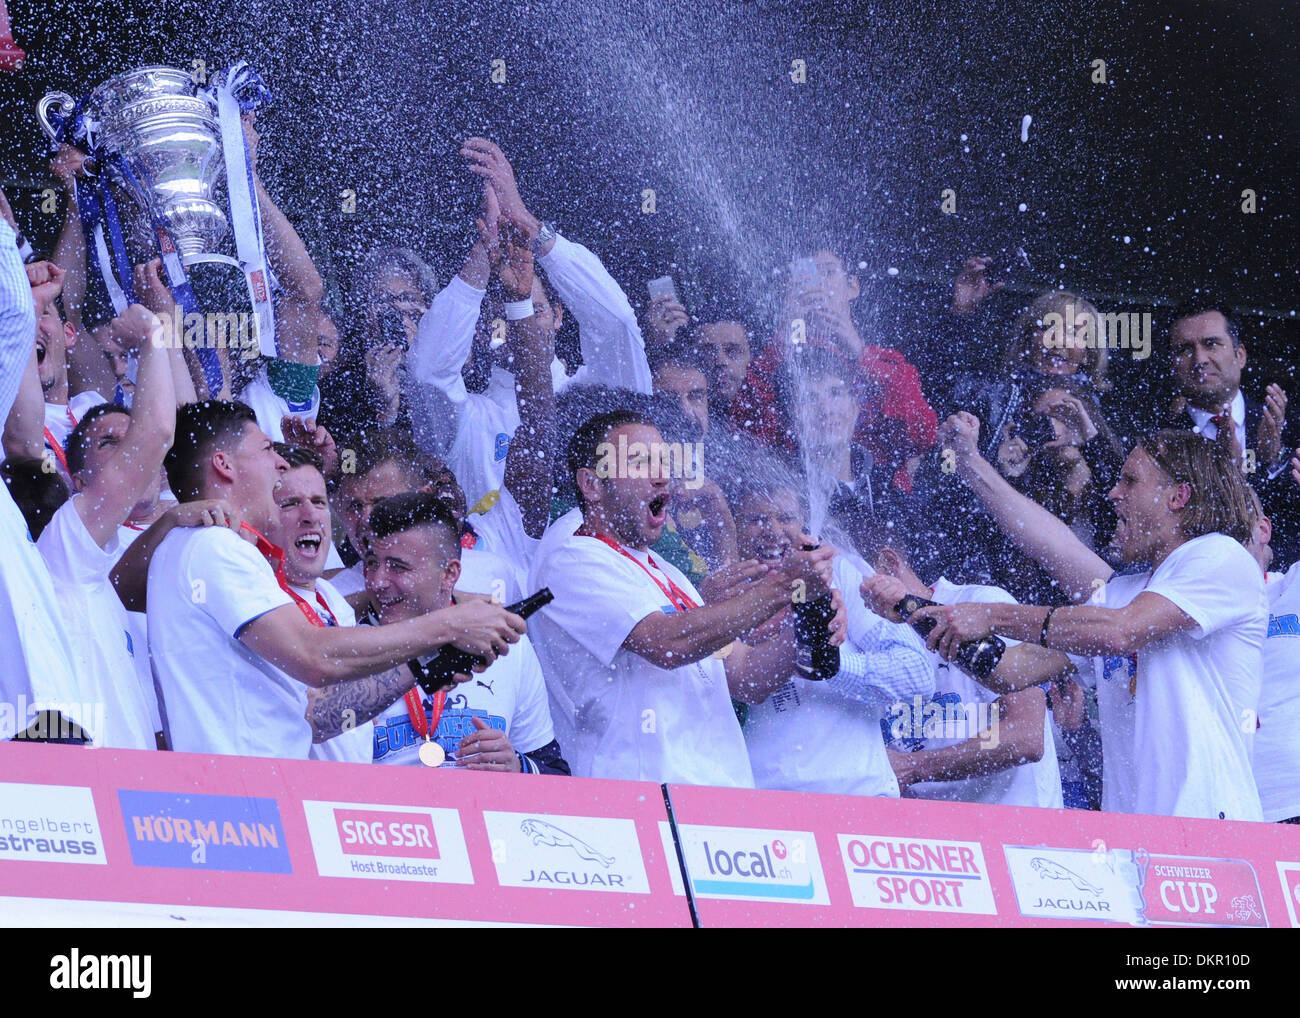 Football, Soccer, sport, Switzerland, cup, Final, trophy, Stade de Suisse, Bern, team, GC, winner, celebration, champagne Stock Photo